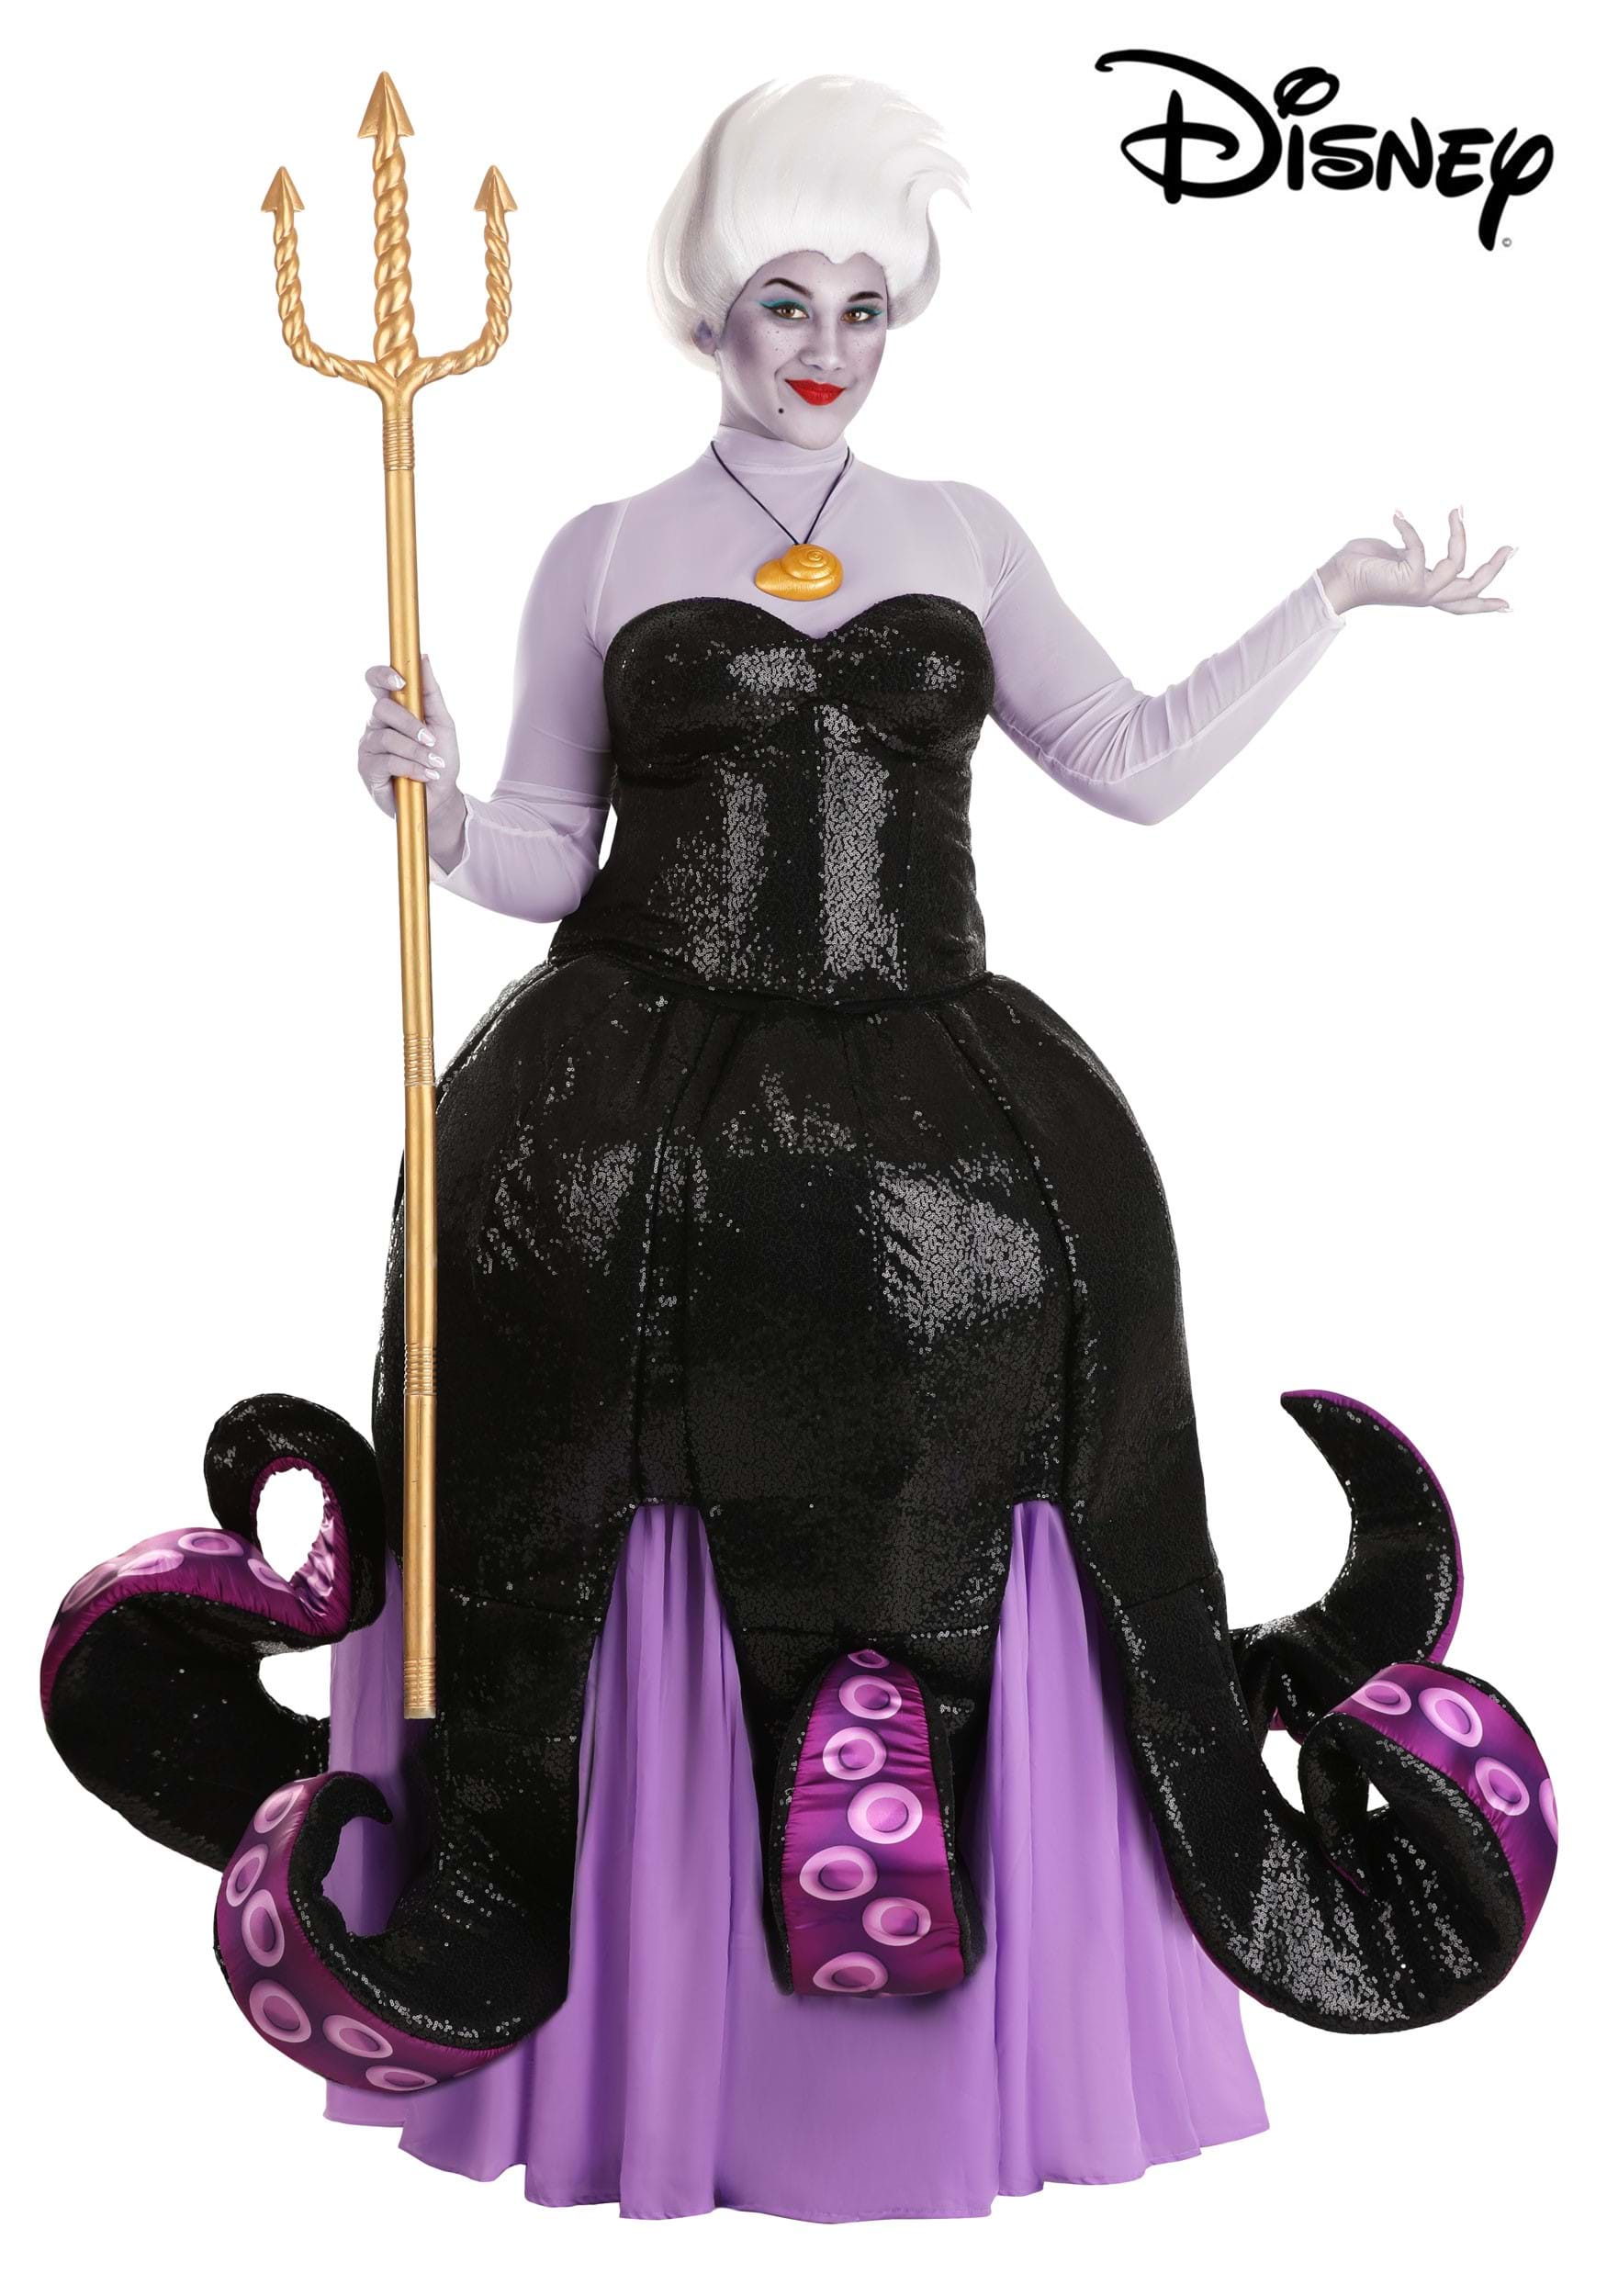 Plus Size Ursula Costume - Ursula Adult Costume inspired Little Mermai –  Mermaidcosplay